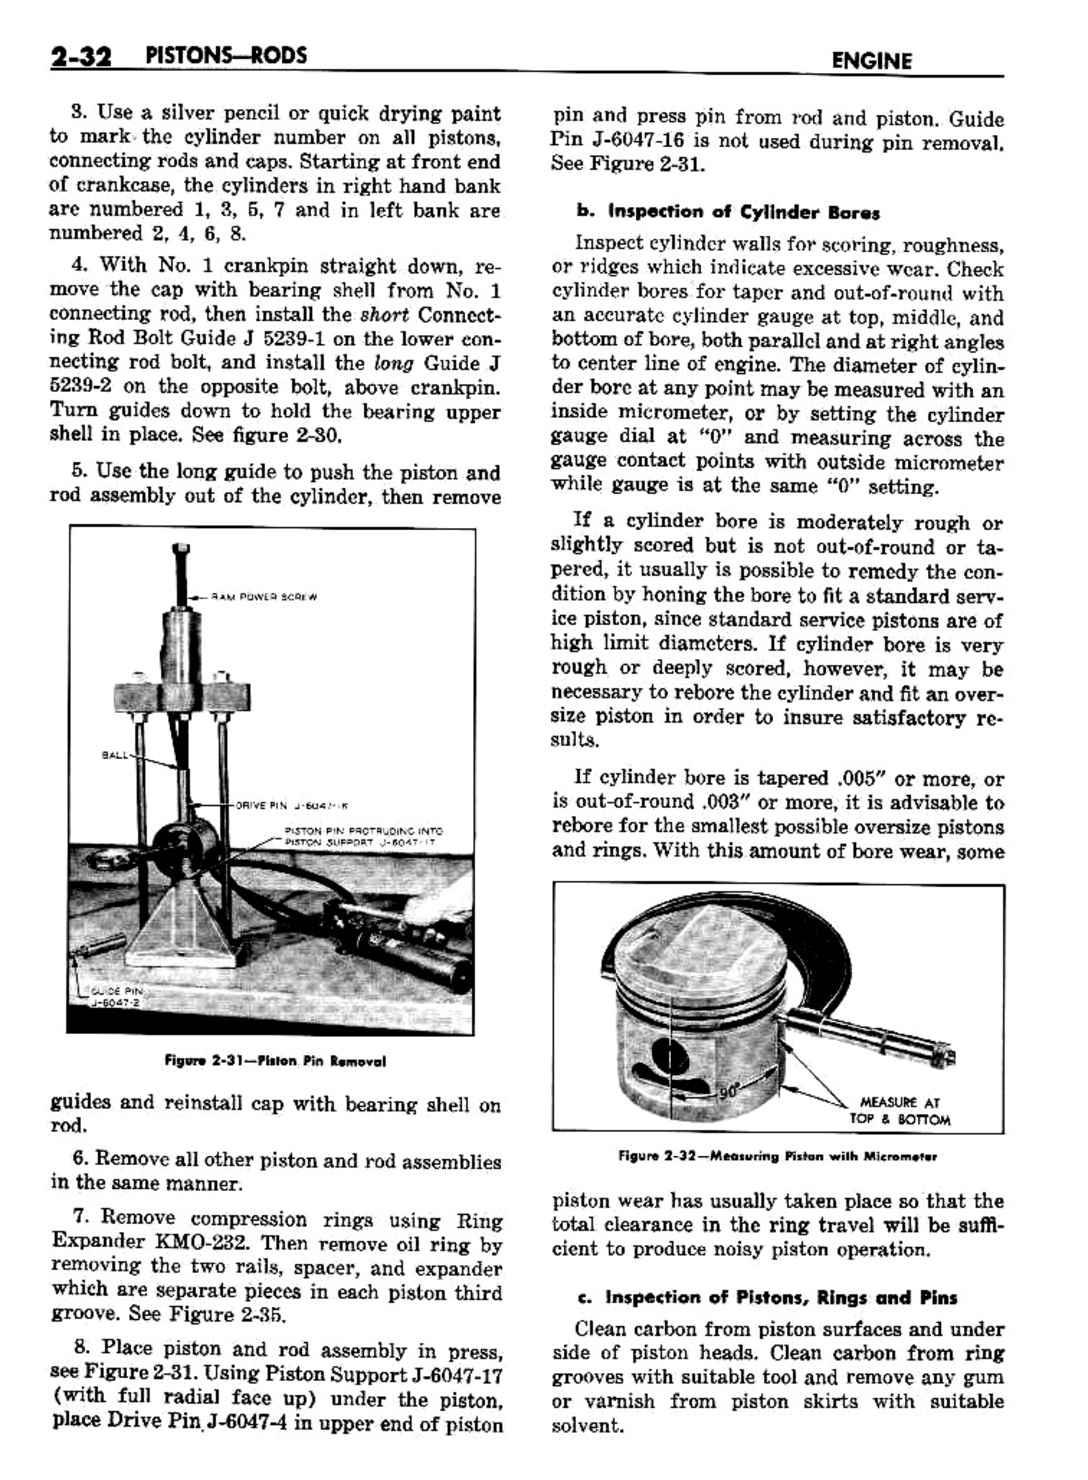 n_03 1957 Buick Shop Manual - Engine-032-032.jpg